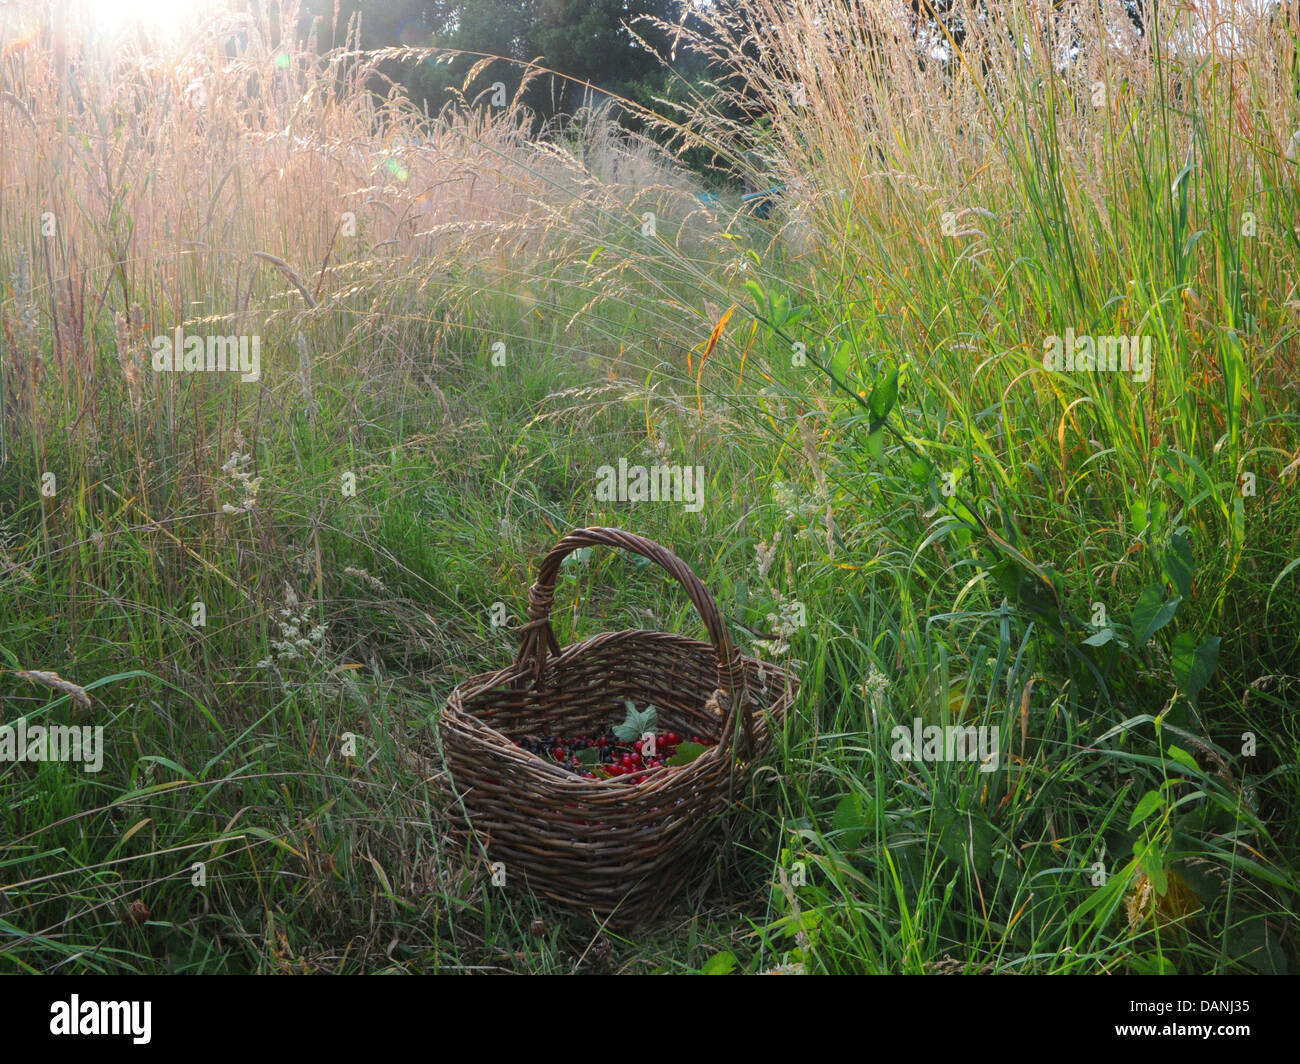 A wicker basket of redcurrants in a wild meadow. Stock Photo